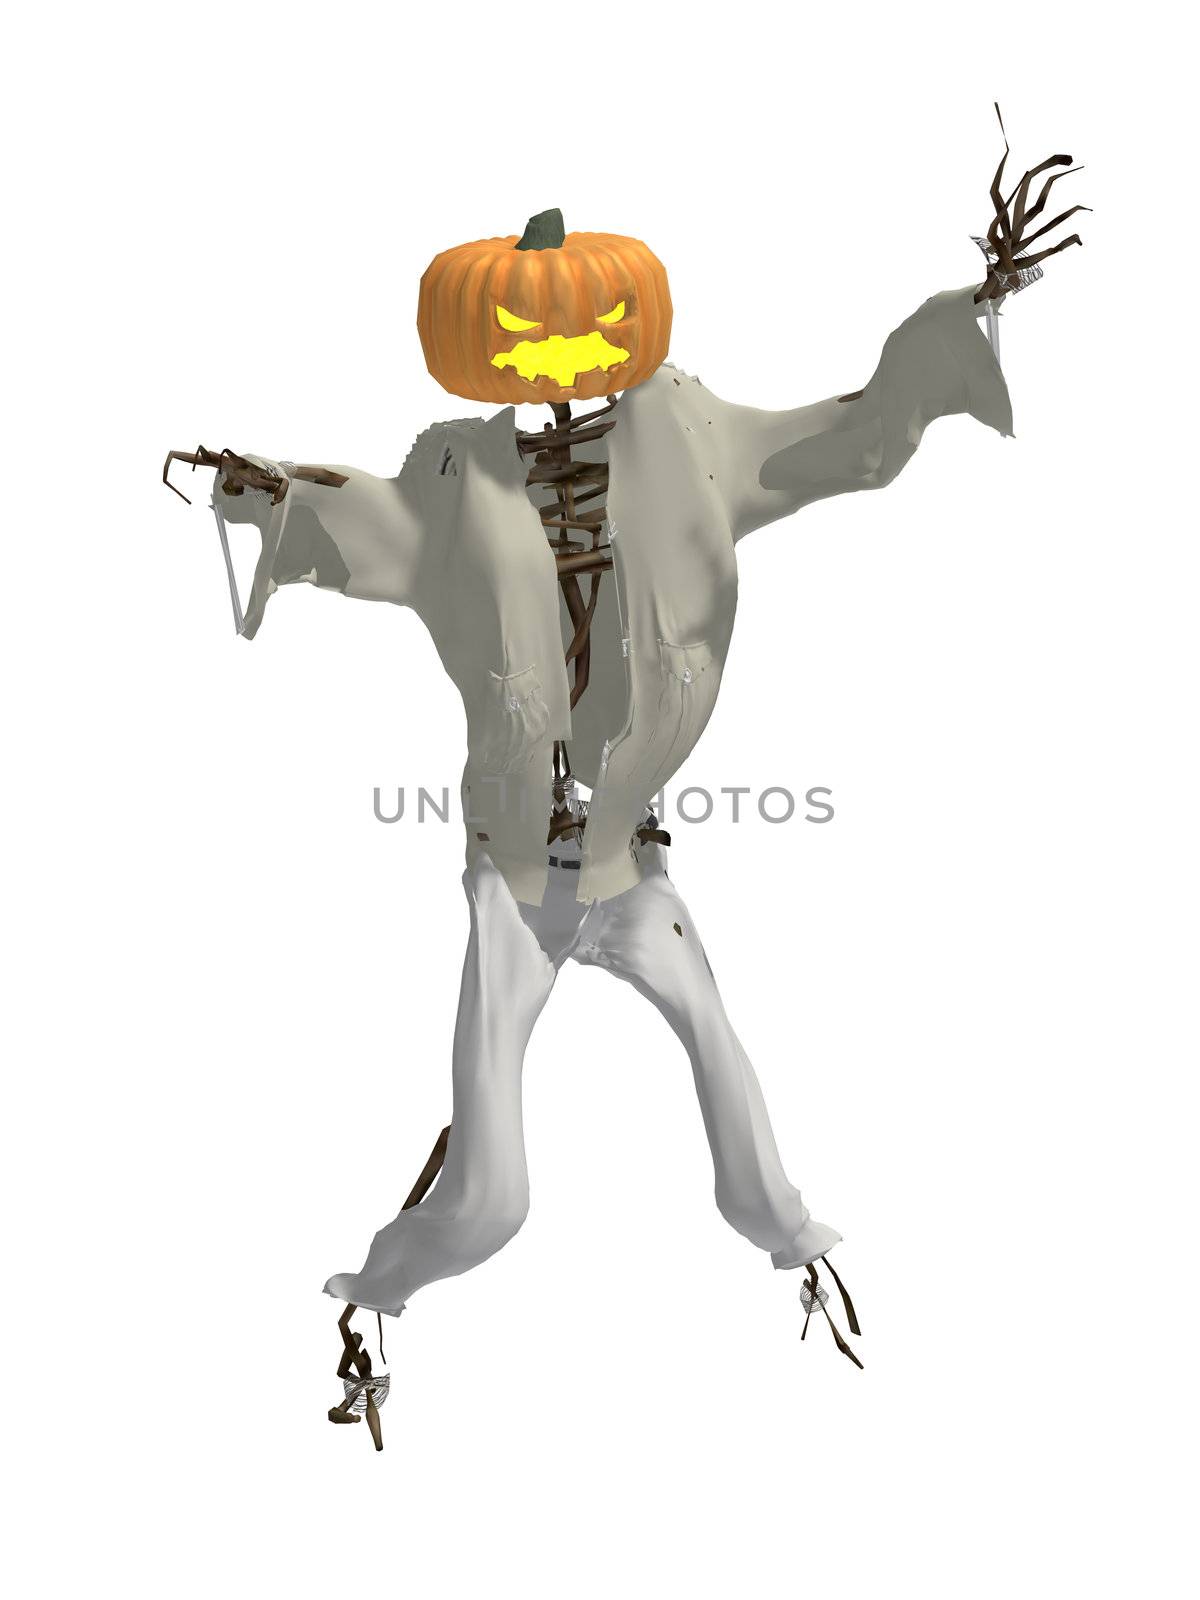 Scary pumpkin man wearing a shirt and pants